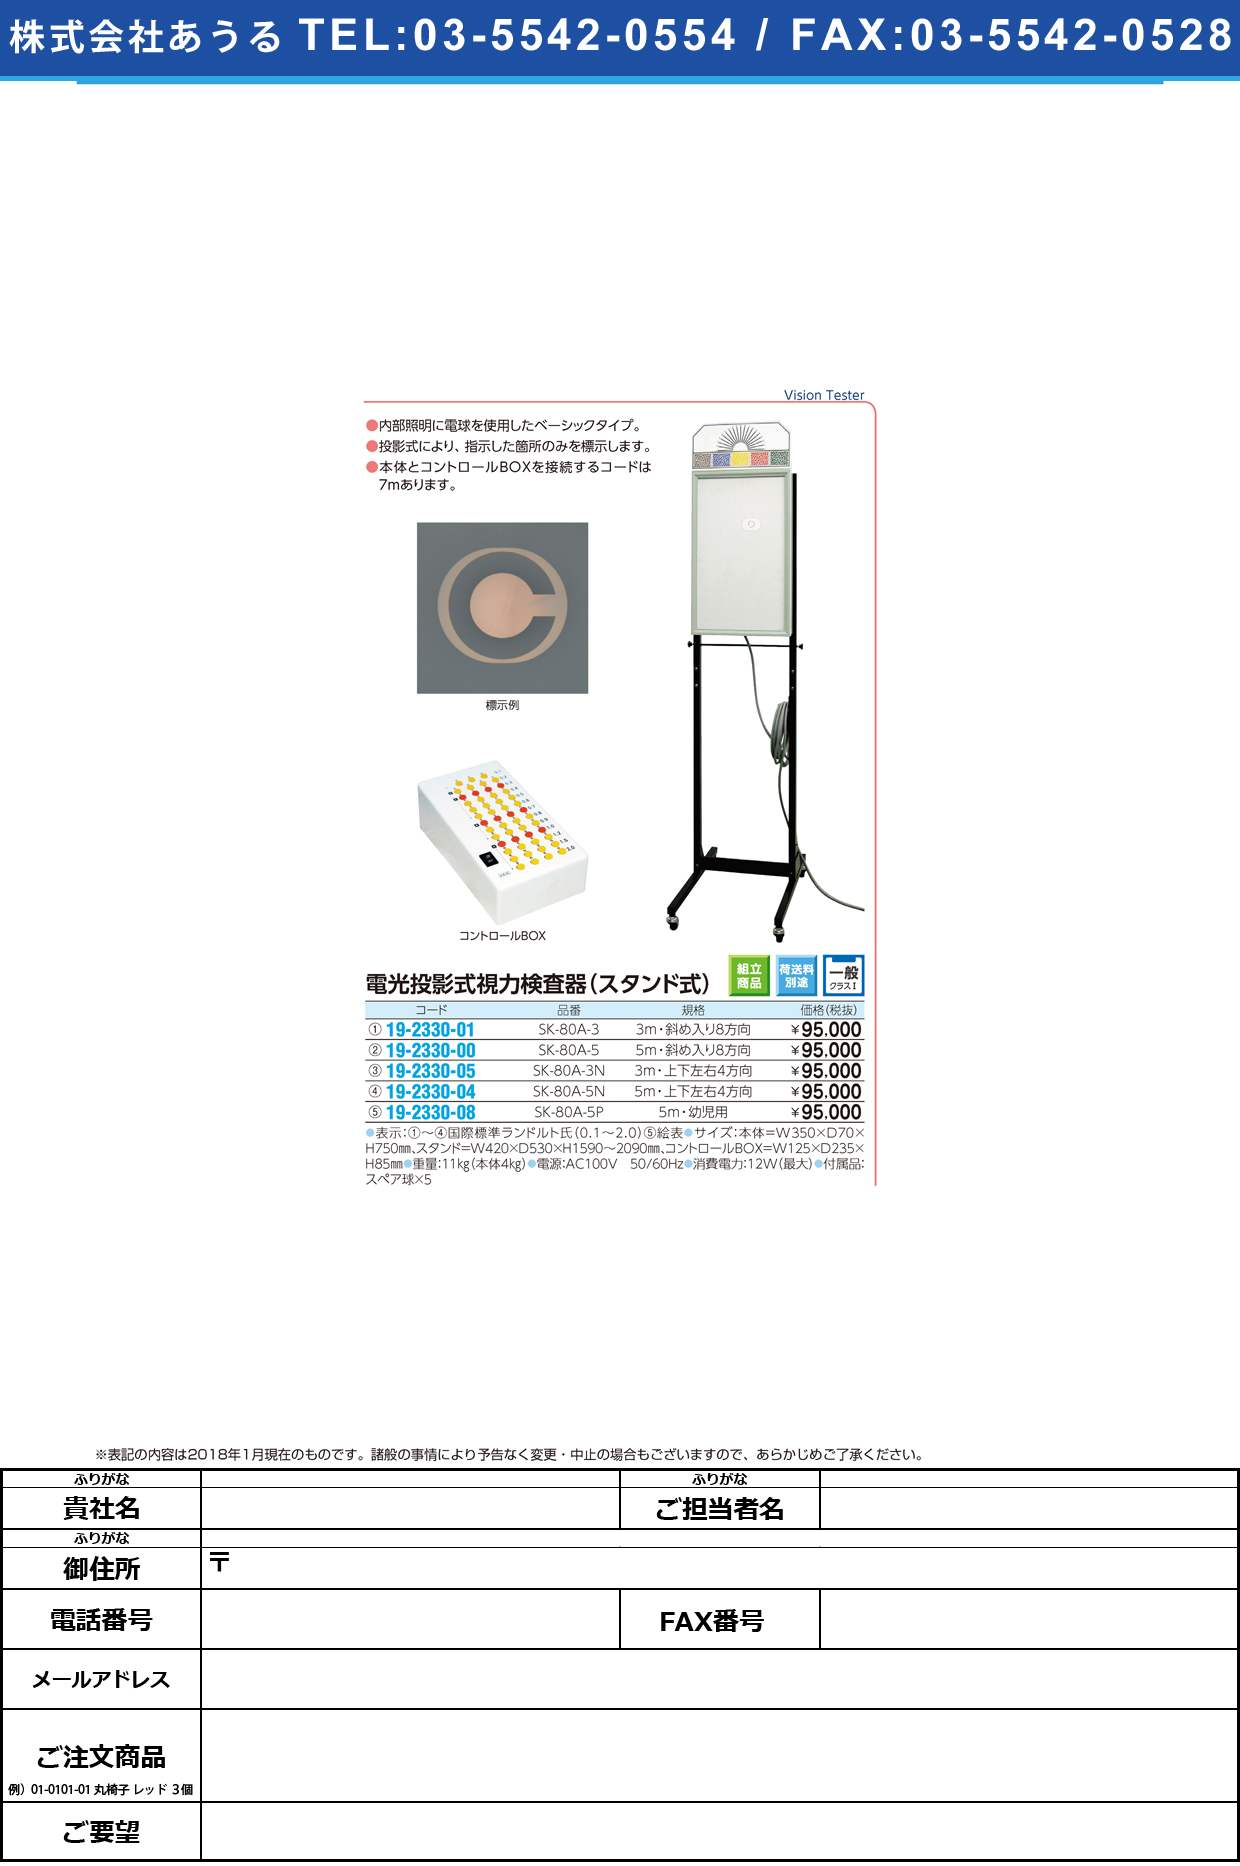 (19-2330-04)電光投影式視力検査器スタンド式５ｍ SK-80A-5N(4ﾎｳｺｳ) ﾃﾞﾝｺｳｼﾘｮｸｹﾝｻｷｽﾀﾝﾄﾞ5M【1台単位】【2018年カタログ商品】